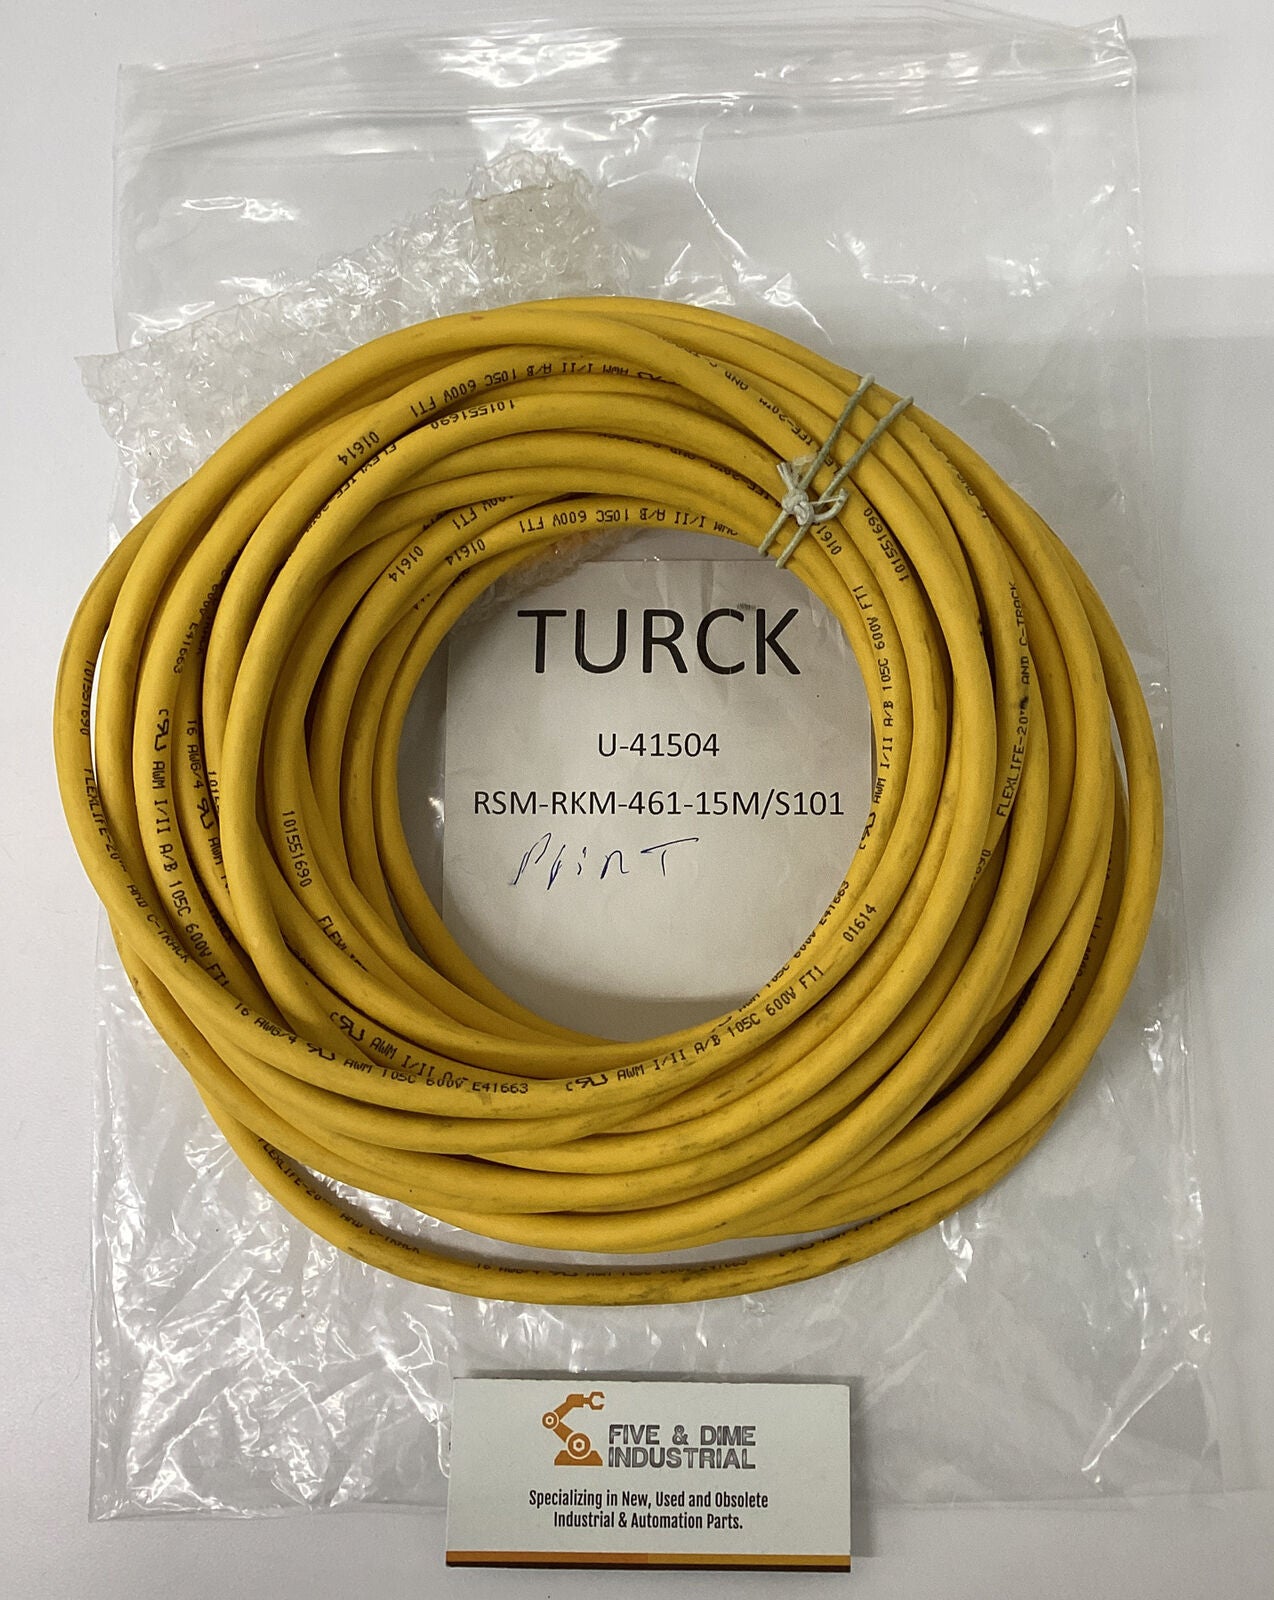 Turck RSM-RKM-461-15M/S101 / U-41504 Cable (CBL130)